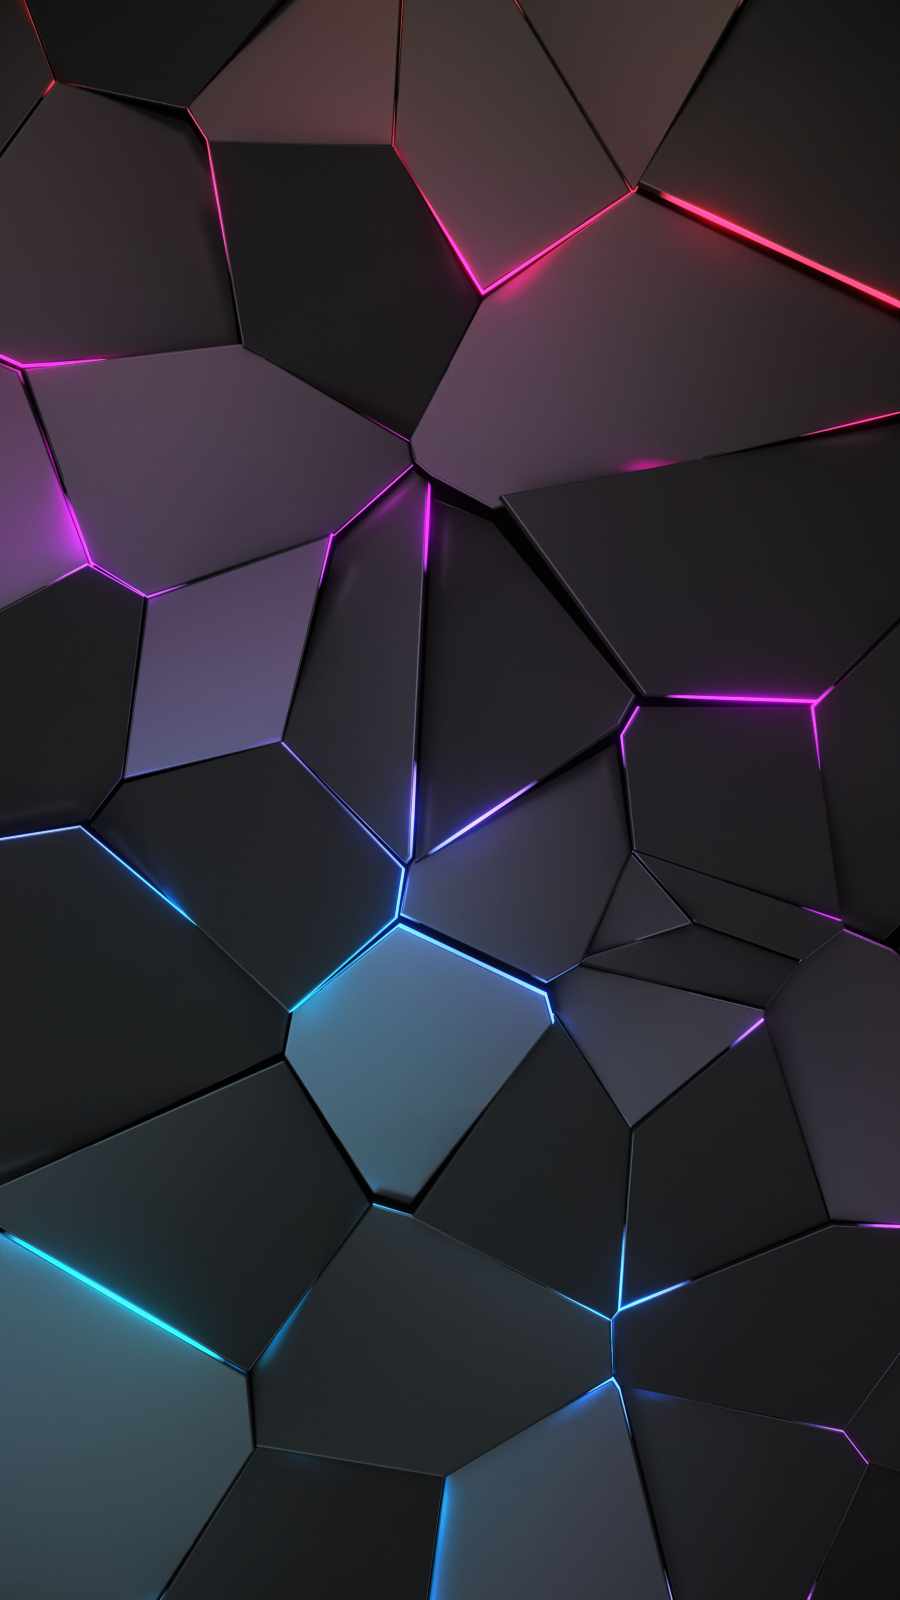 3D Geometric Neon IPhone Wallpaper - IPhone Wallpapers : iPhone Wallpapers